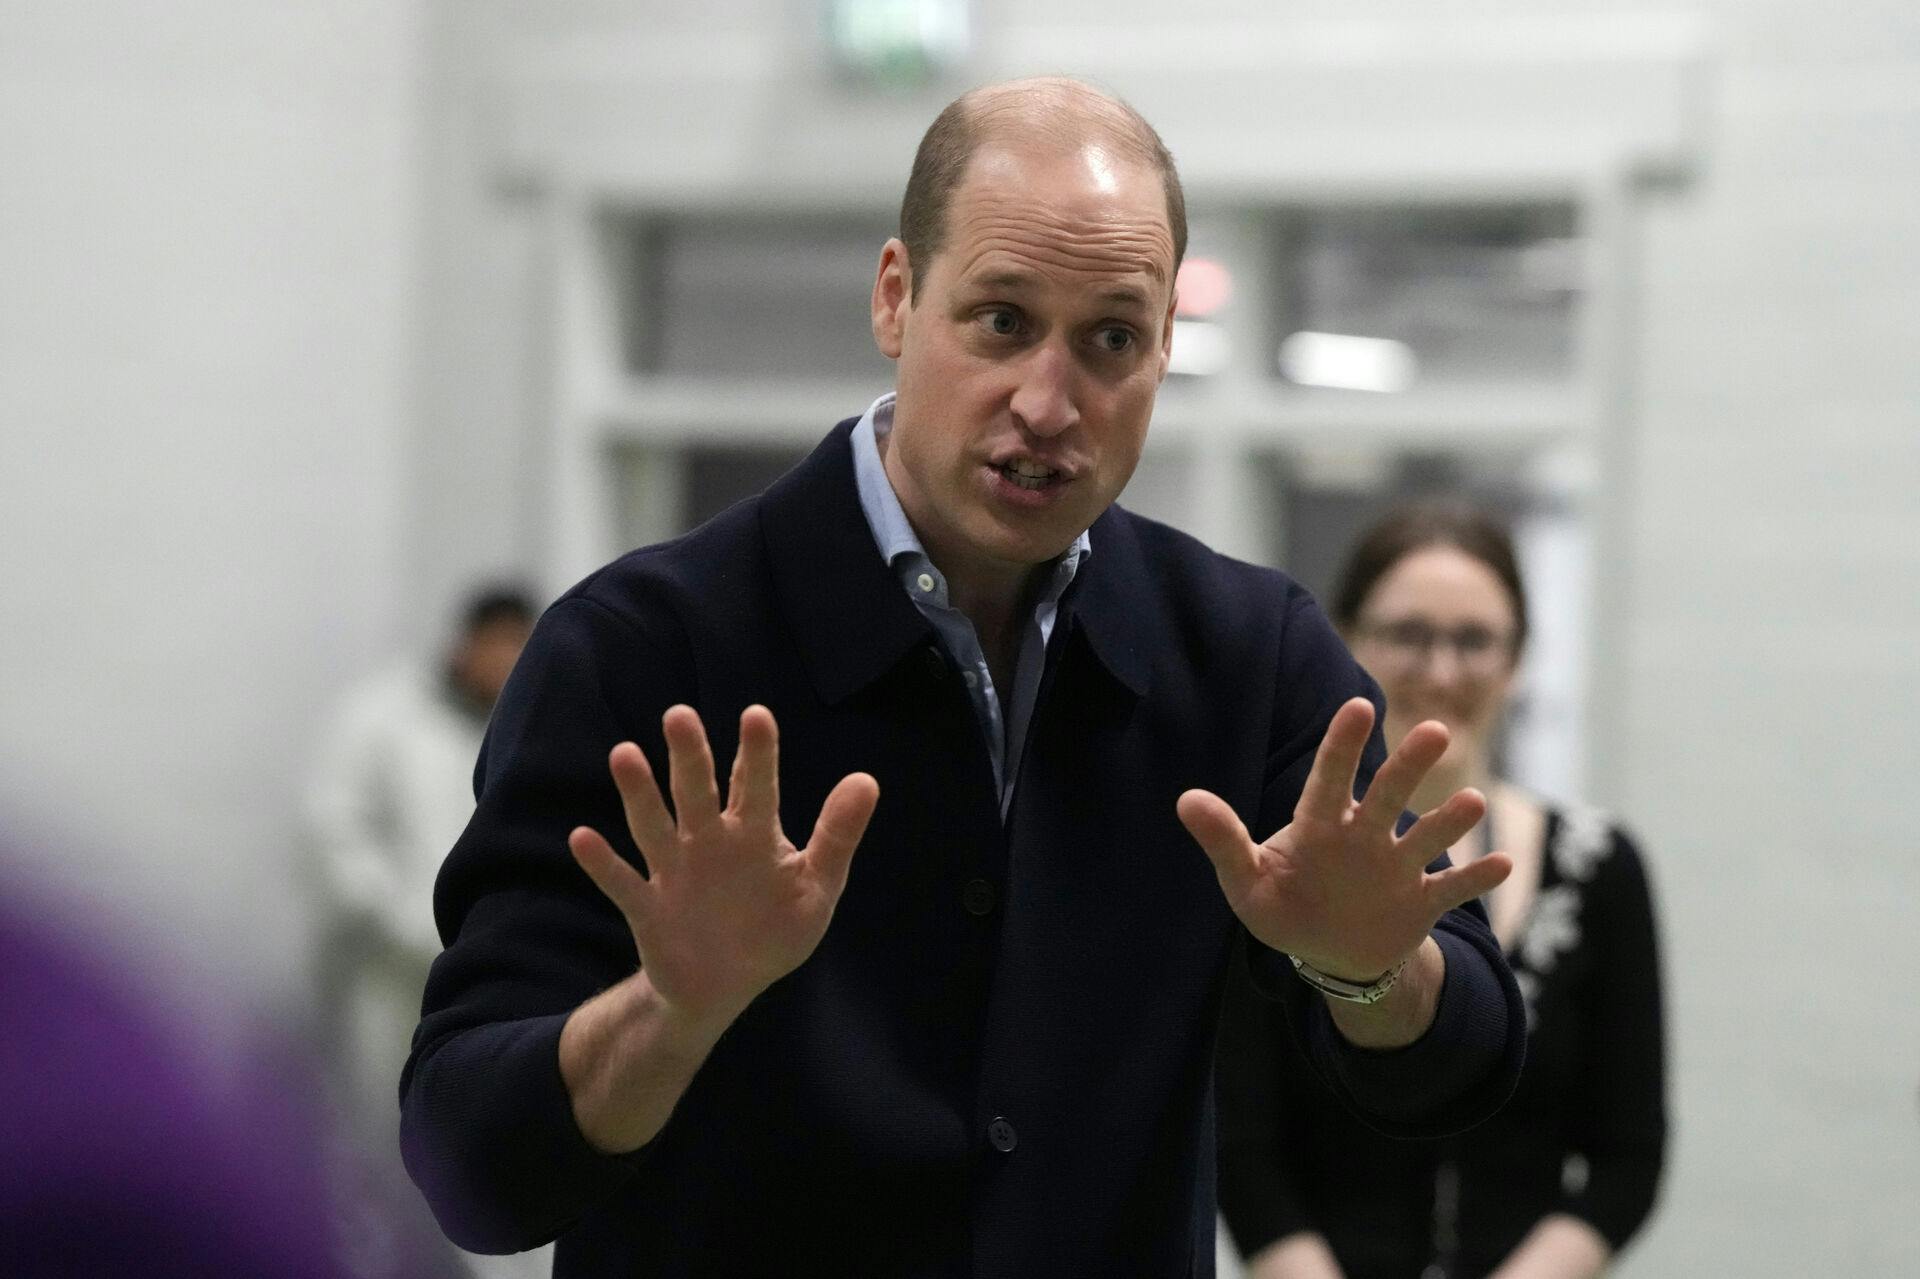 Prince William gestures 